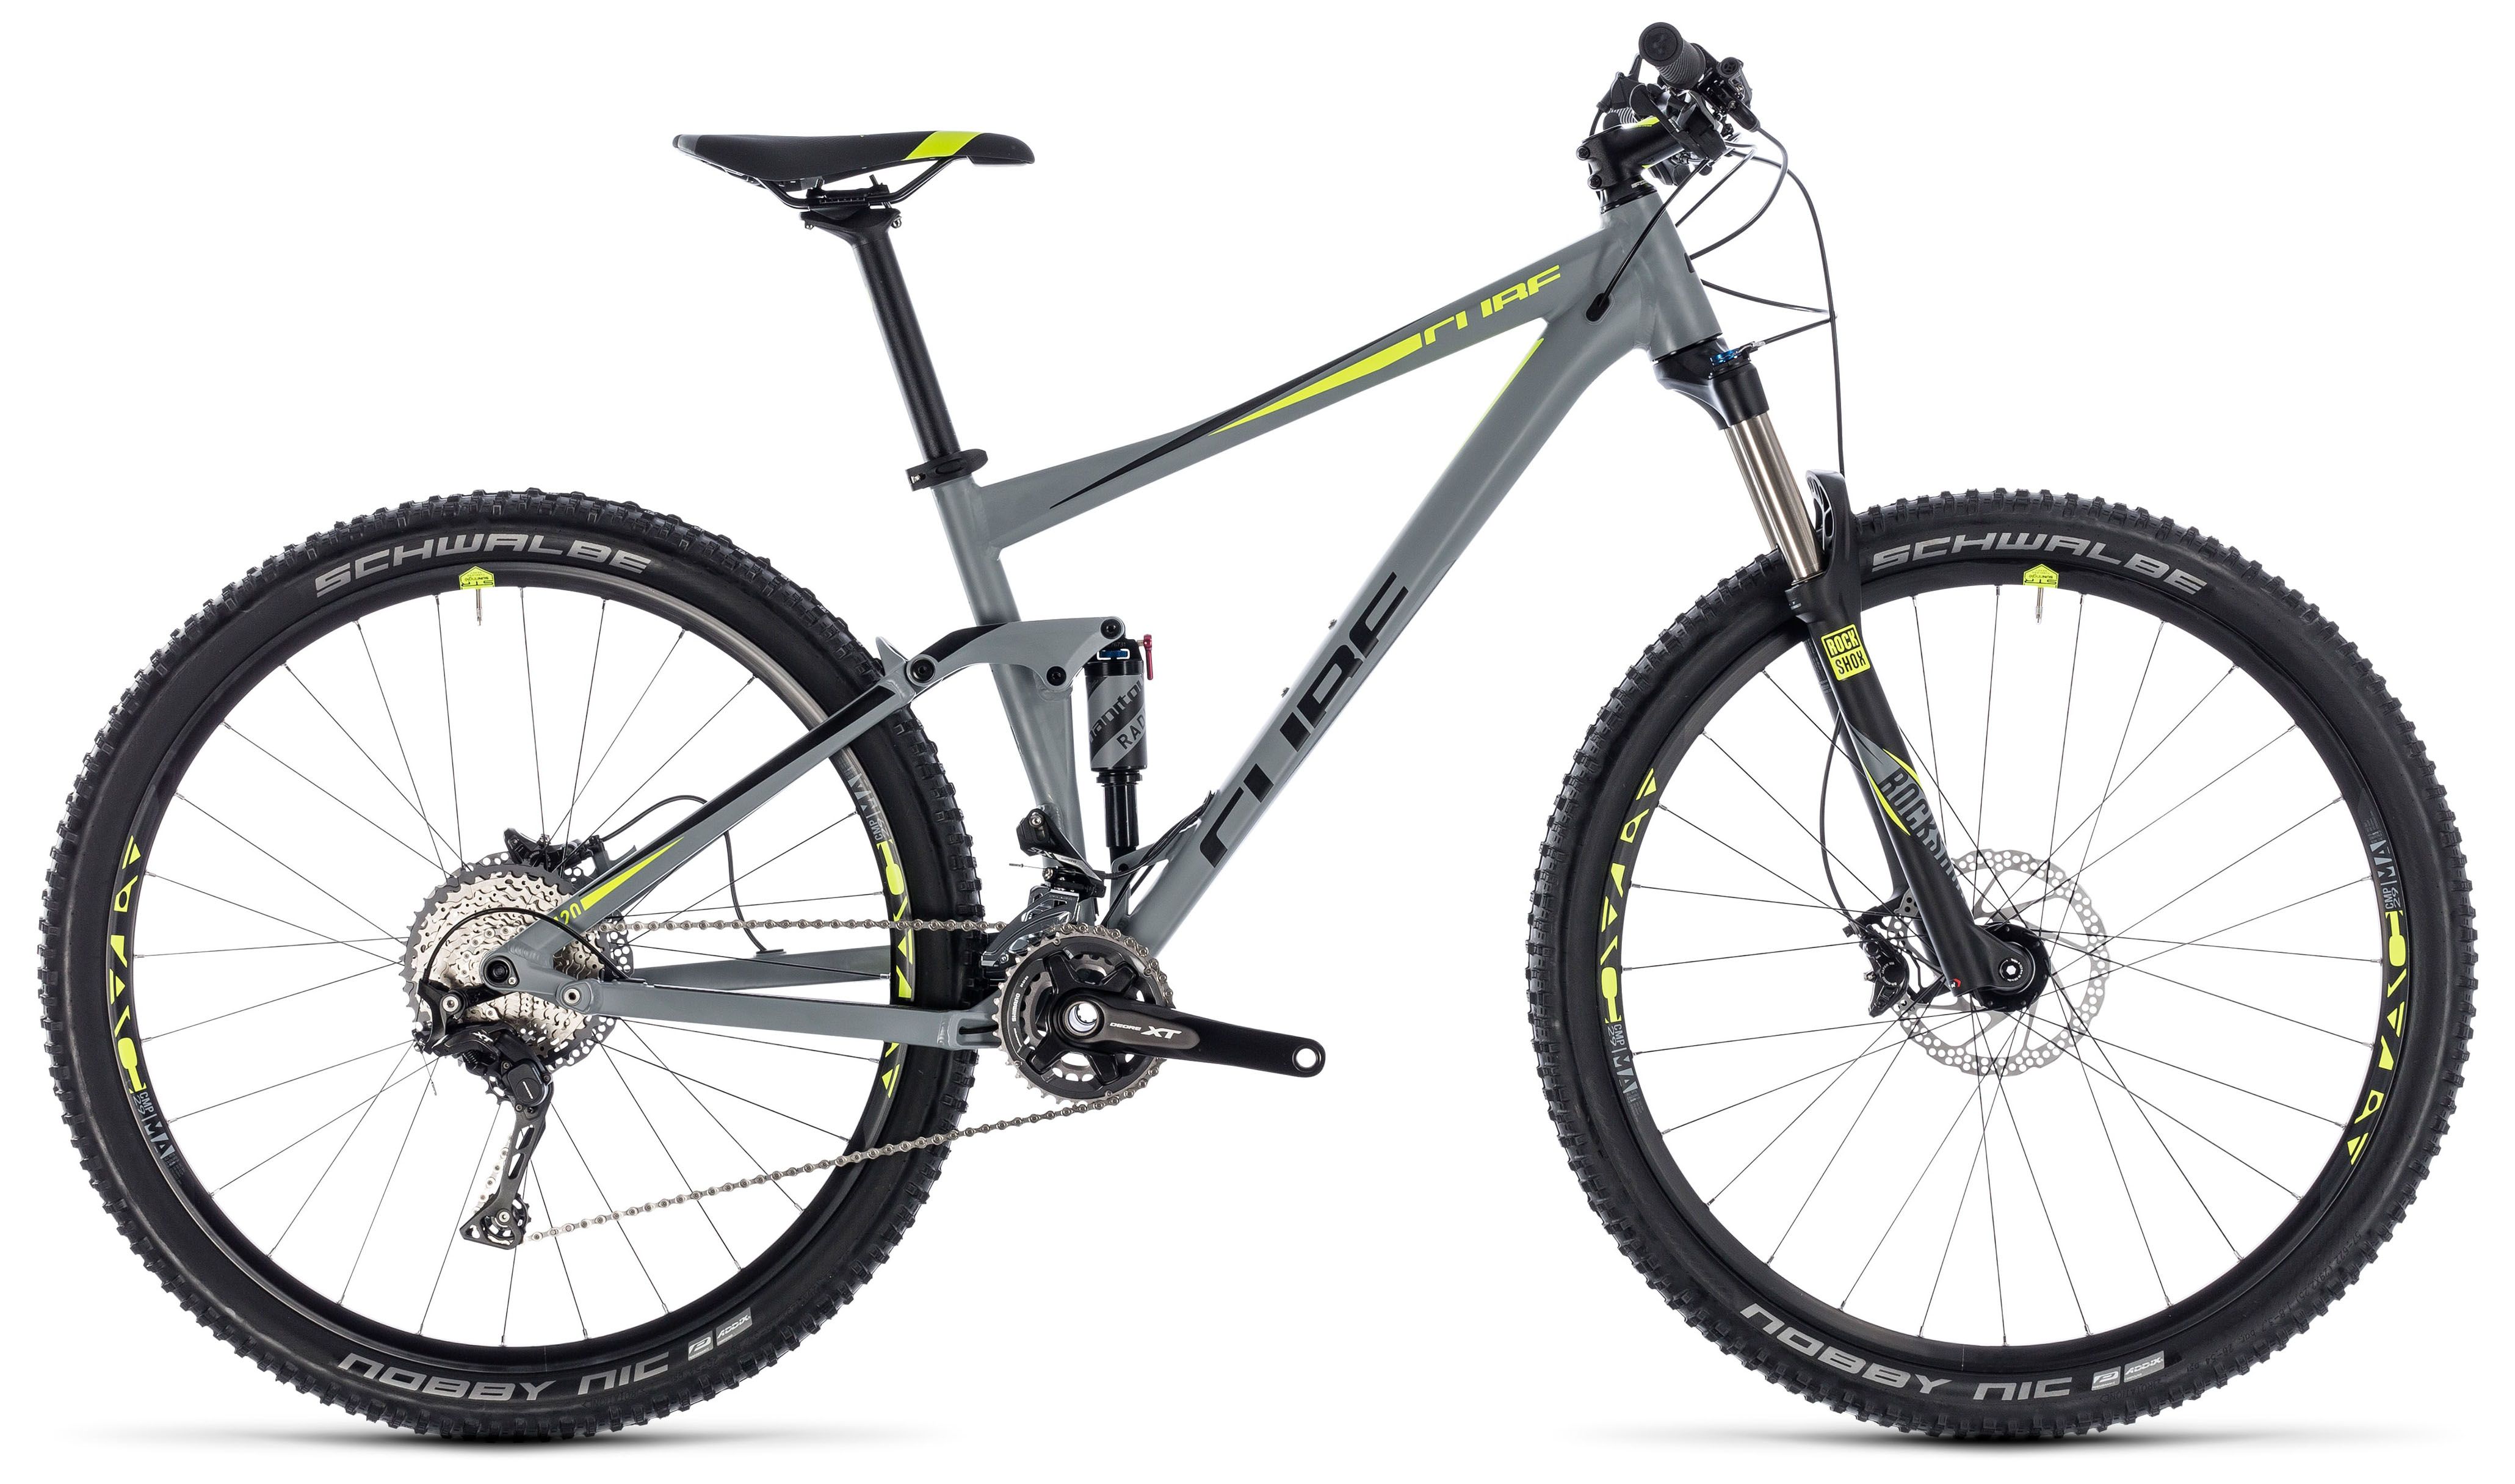 Купить велосипед 120 кг. Горный (MTB) велосипед Rocky Mountain Altitude 730 (2015). Forward Quadro 27.5 3.0. Cube stereo 160 HPC Race. Haibike SDURO FULLNINE 4.0 500wh (2020).